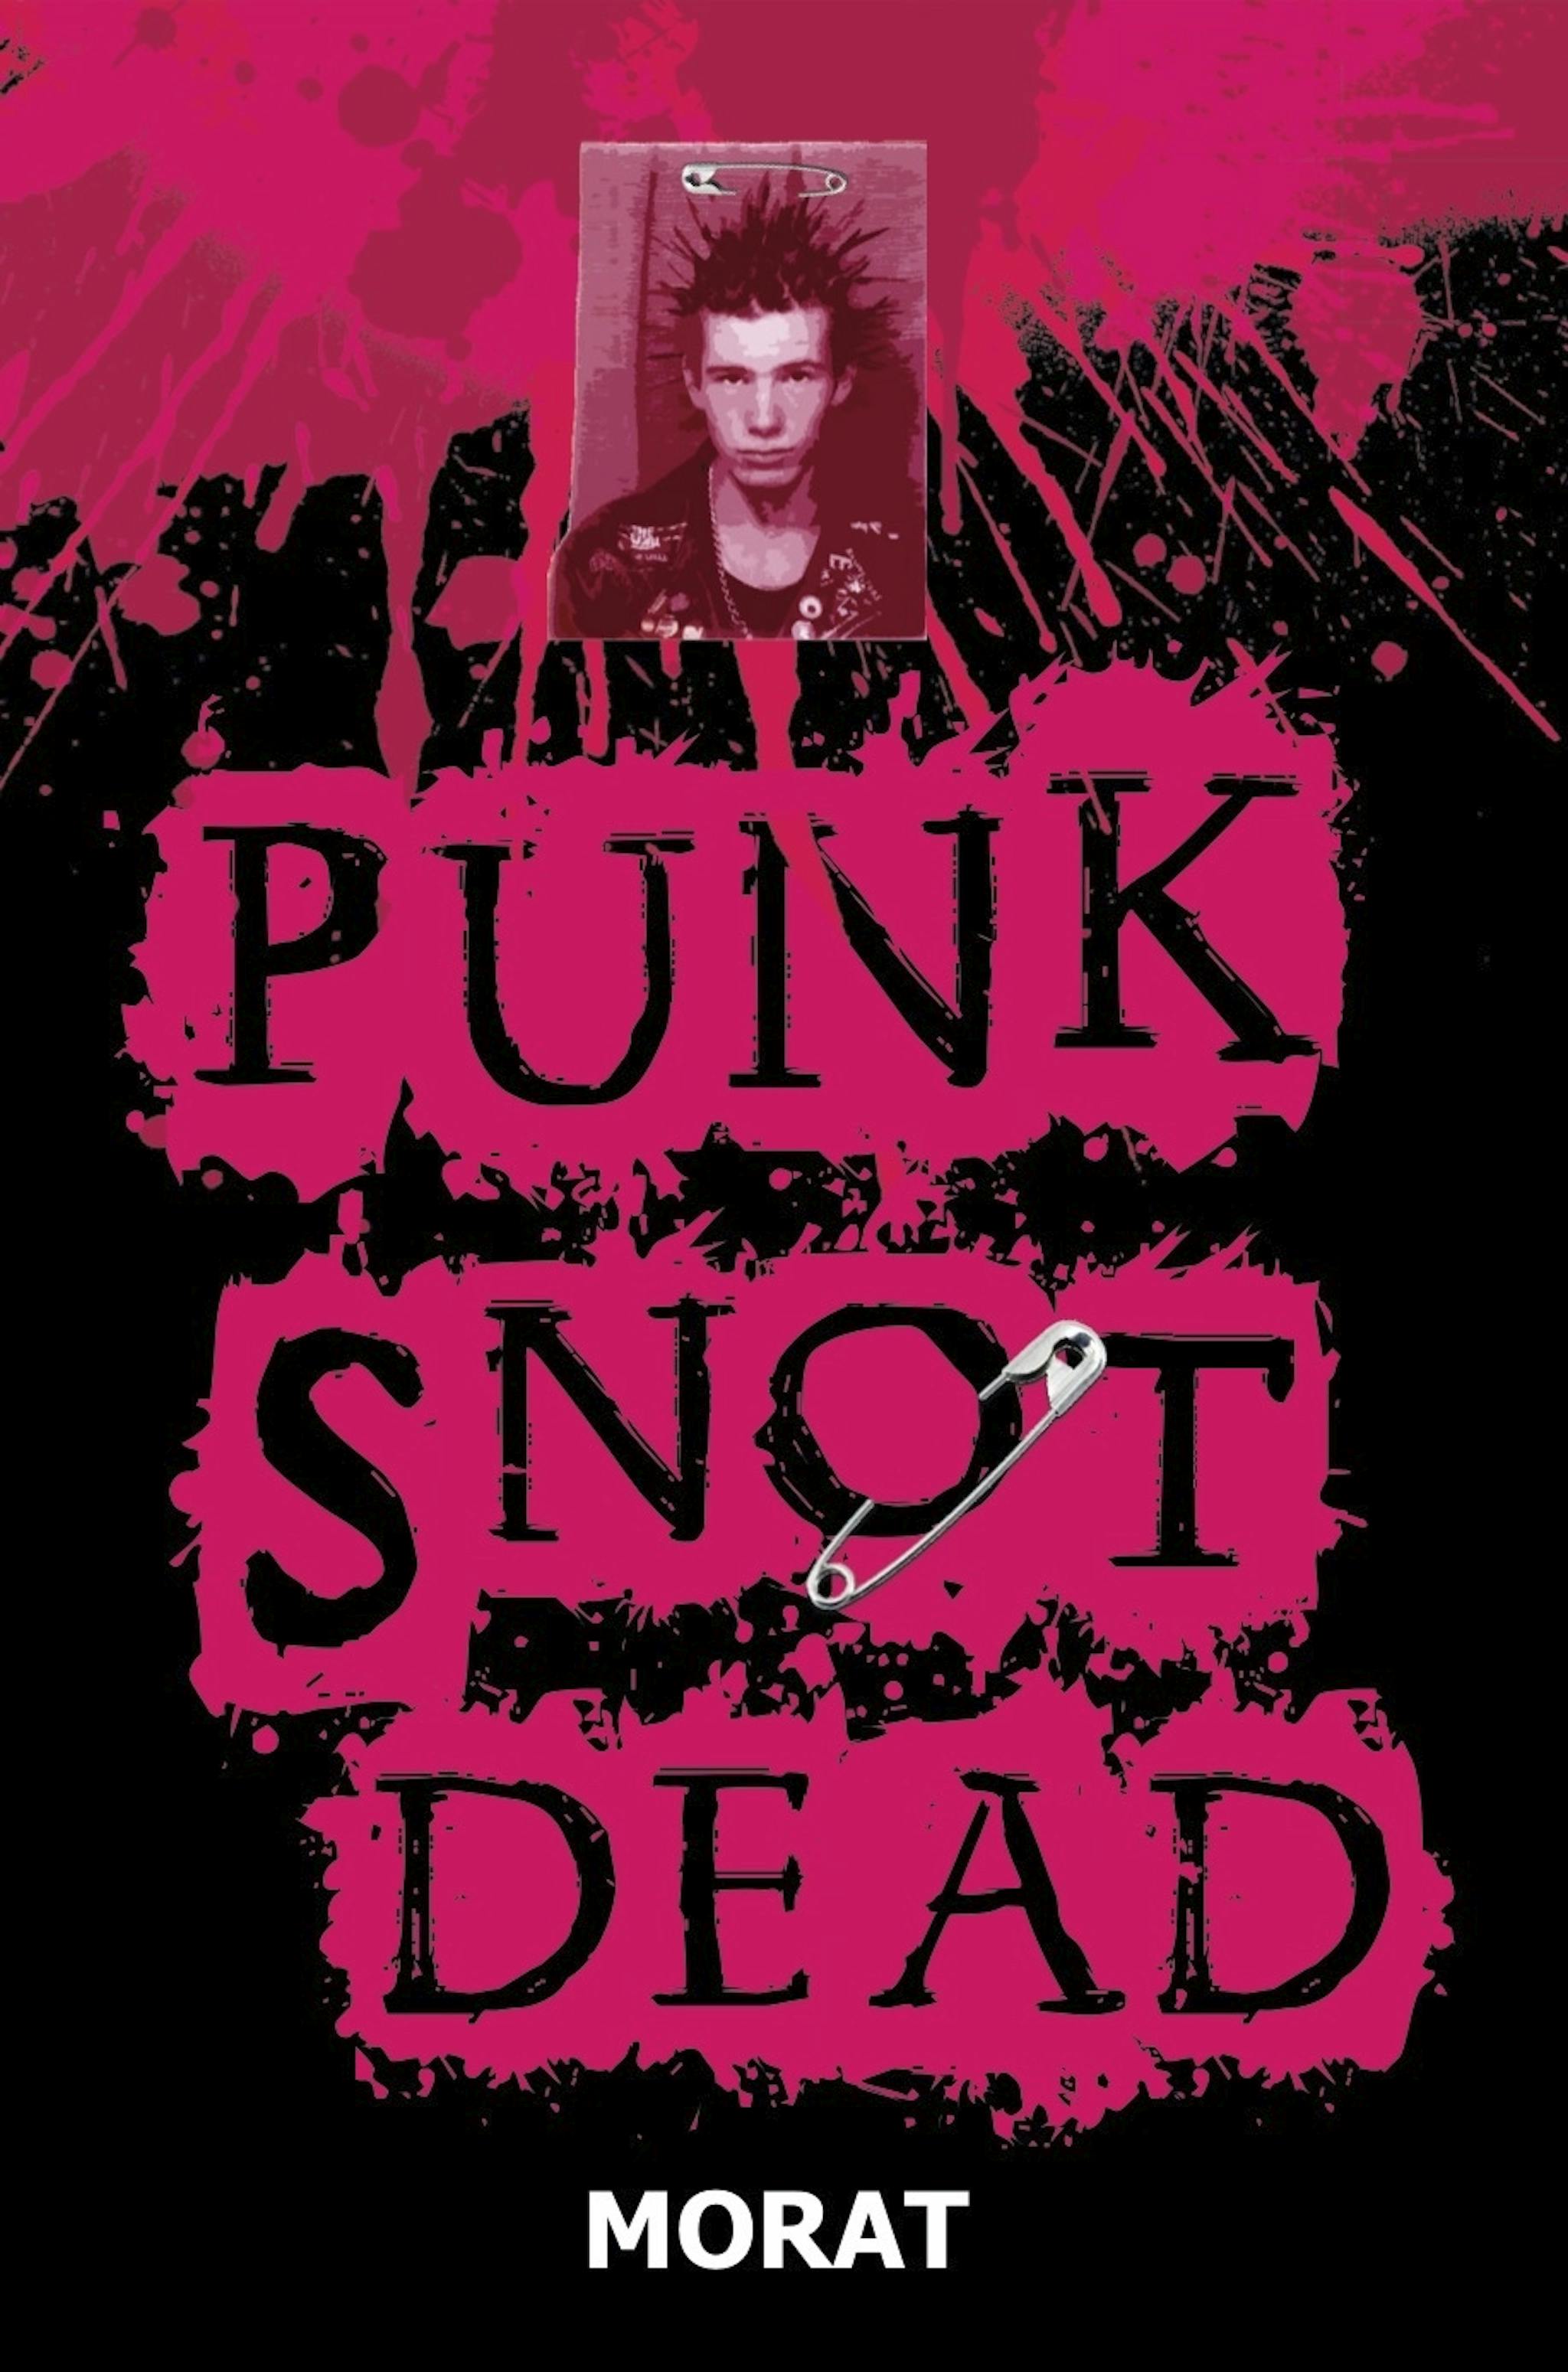 Morat Punk Snot Dead